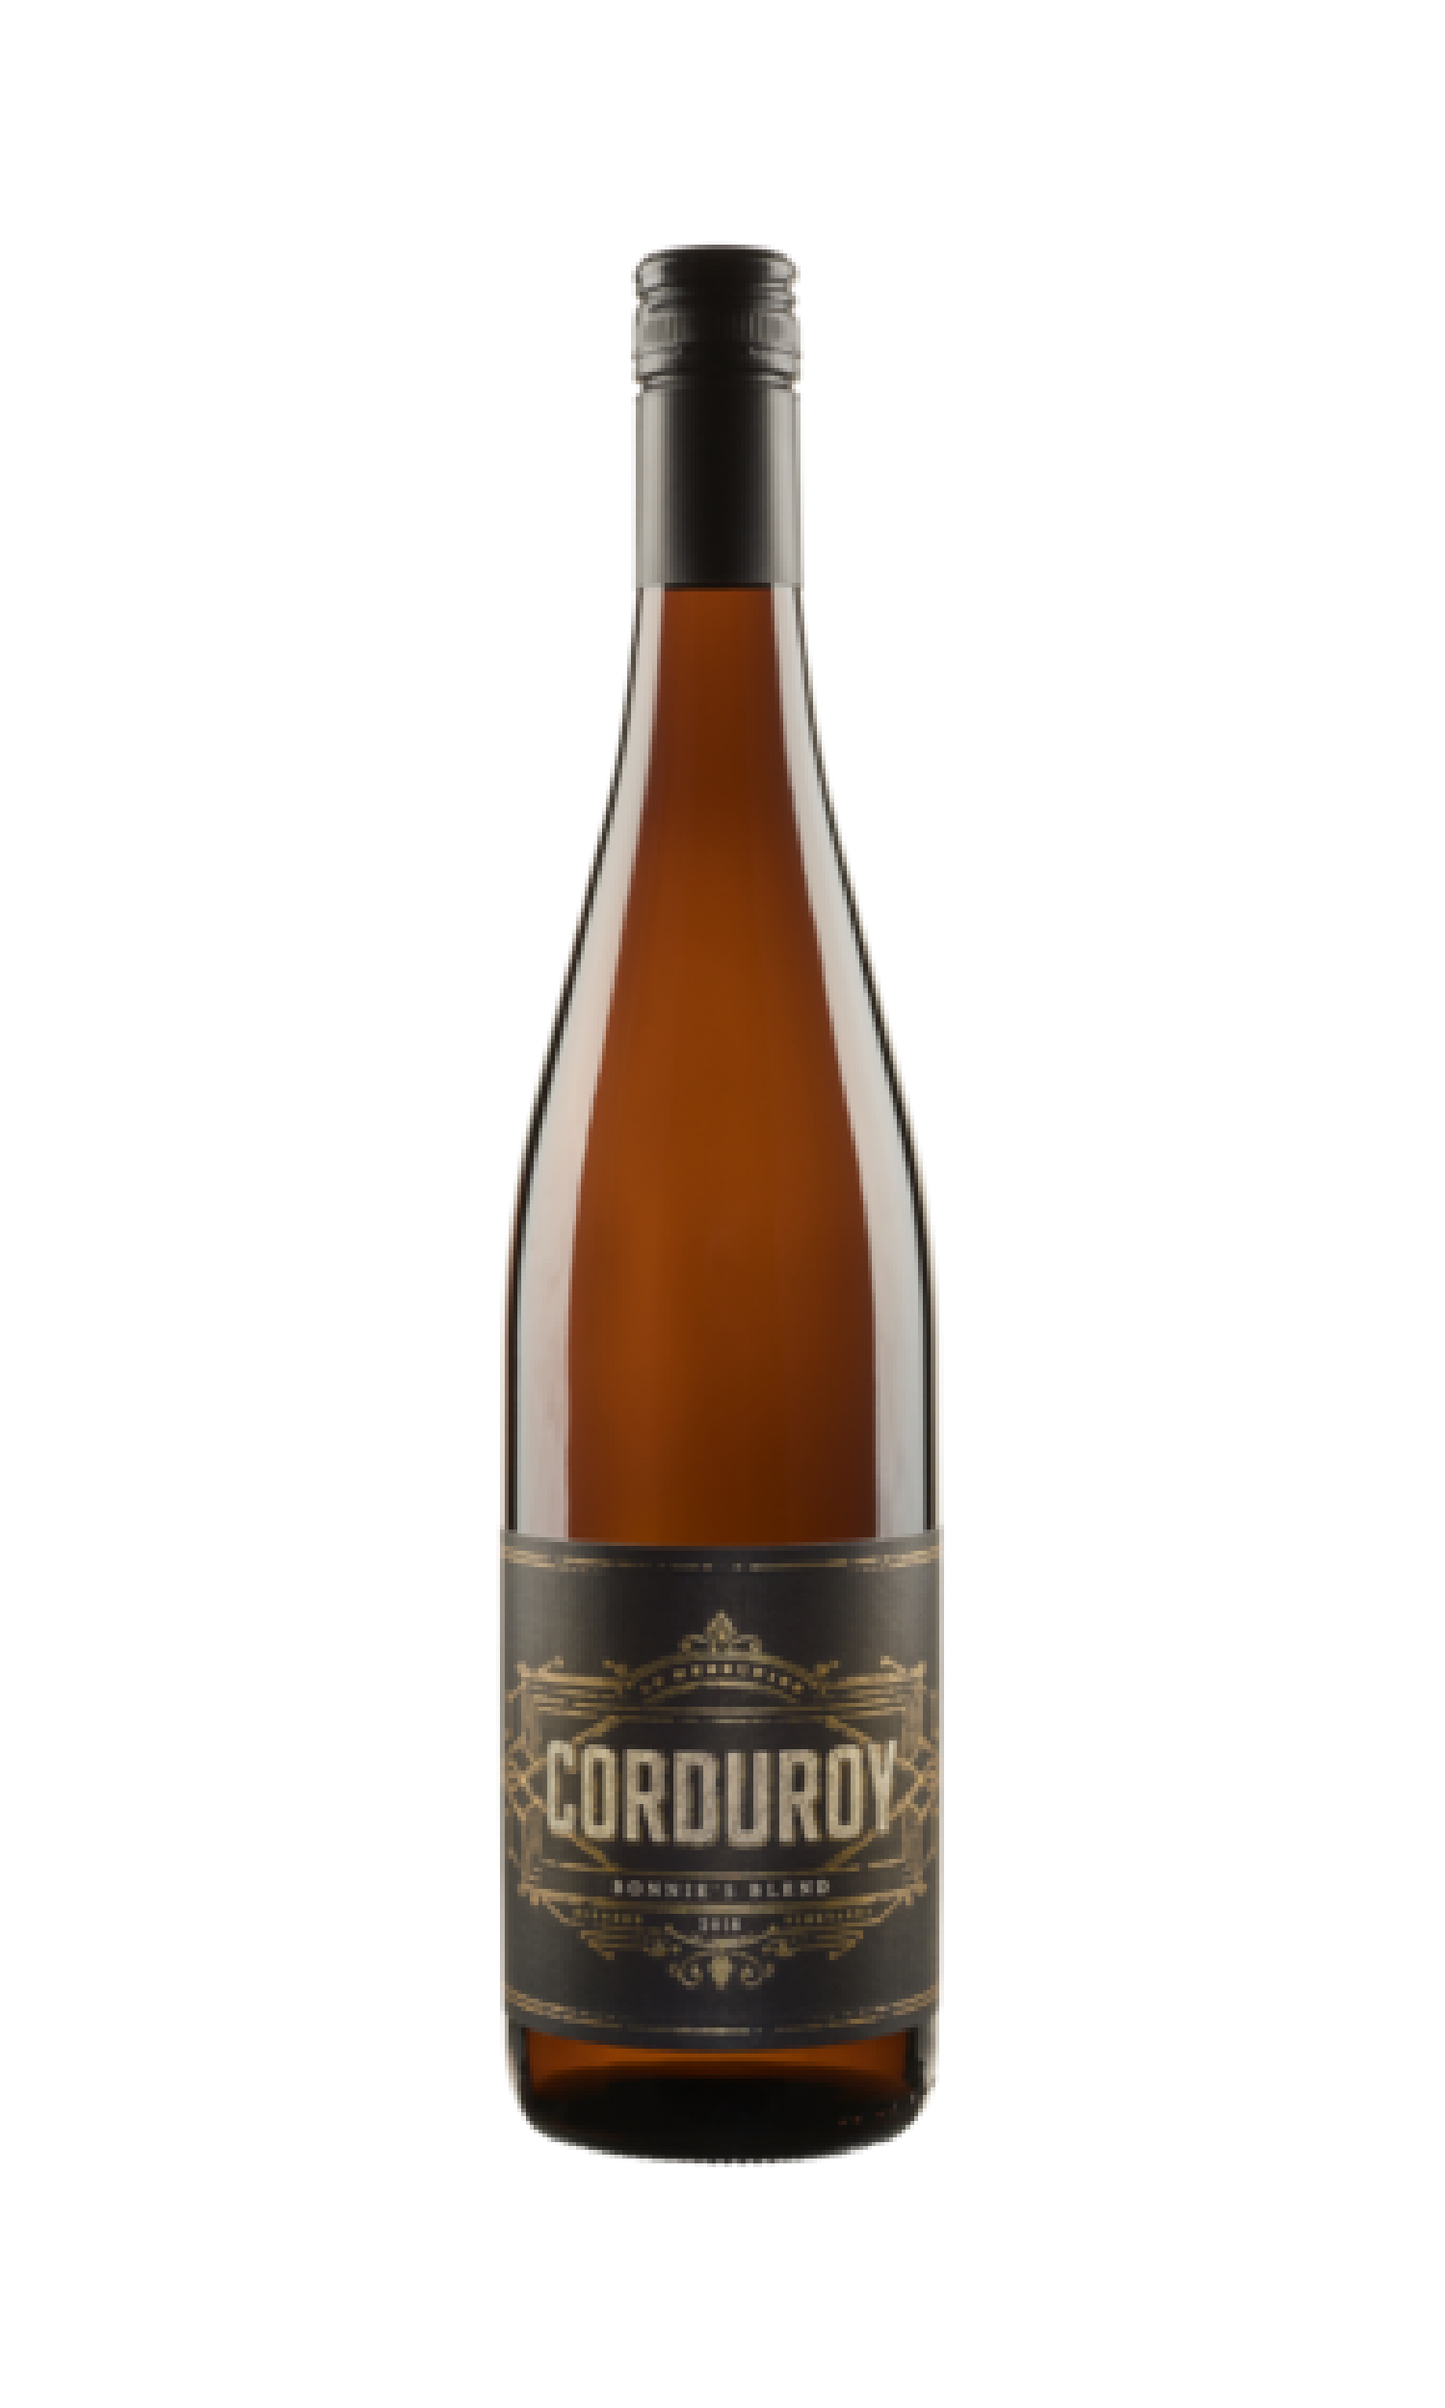 Corduroy Bonnies Blend Semillon Chardonnay 2017